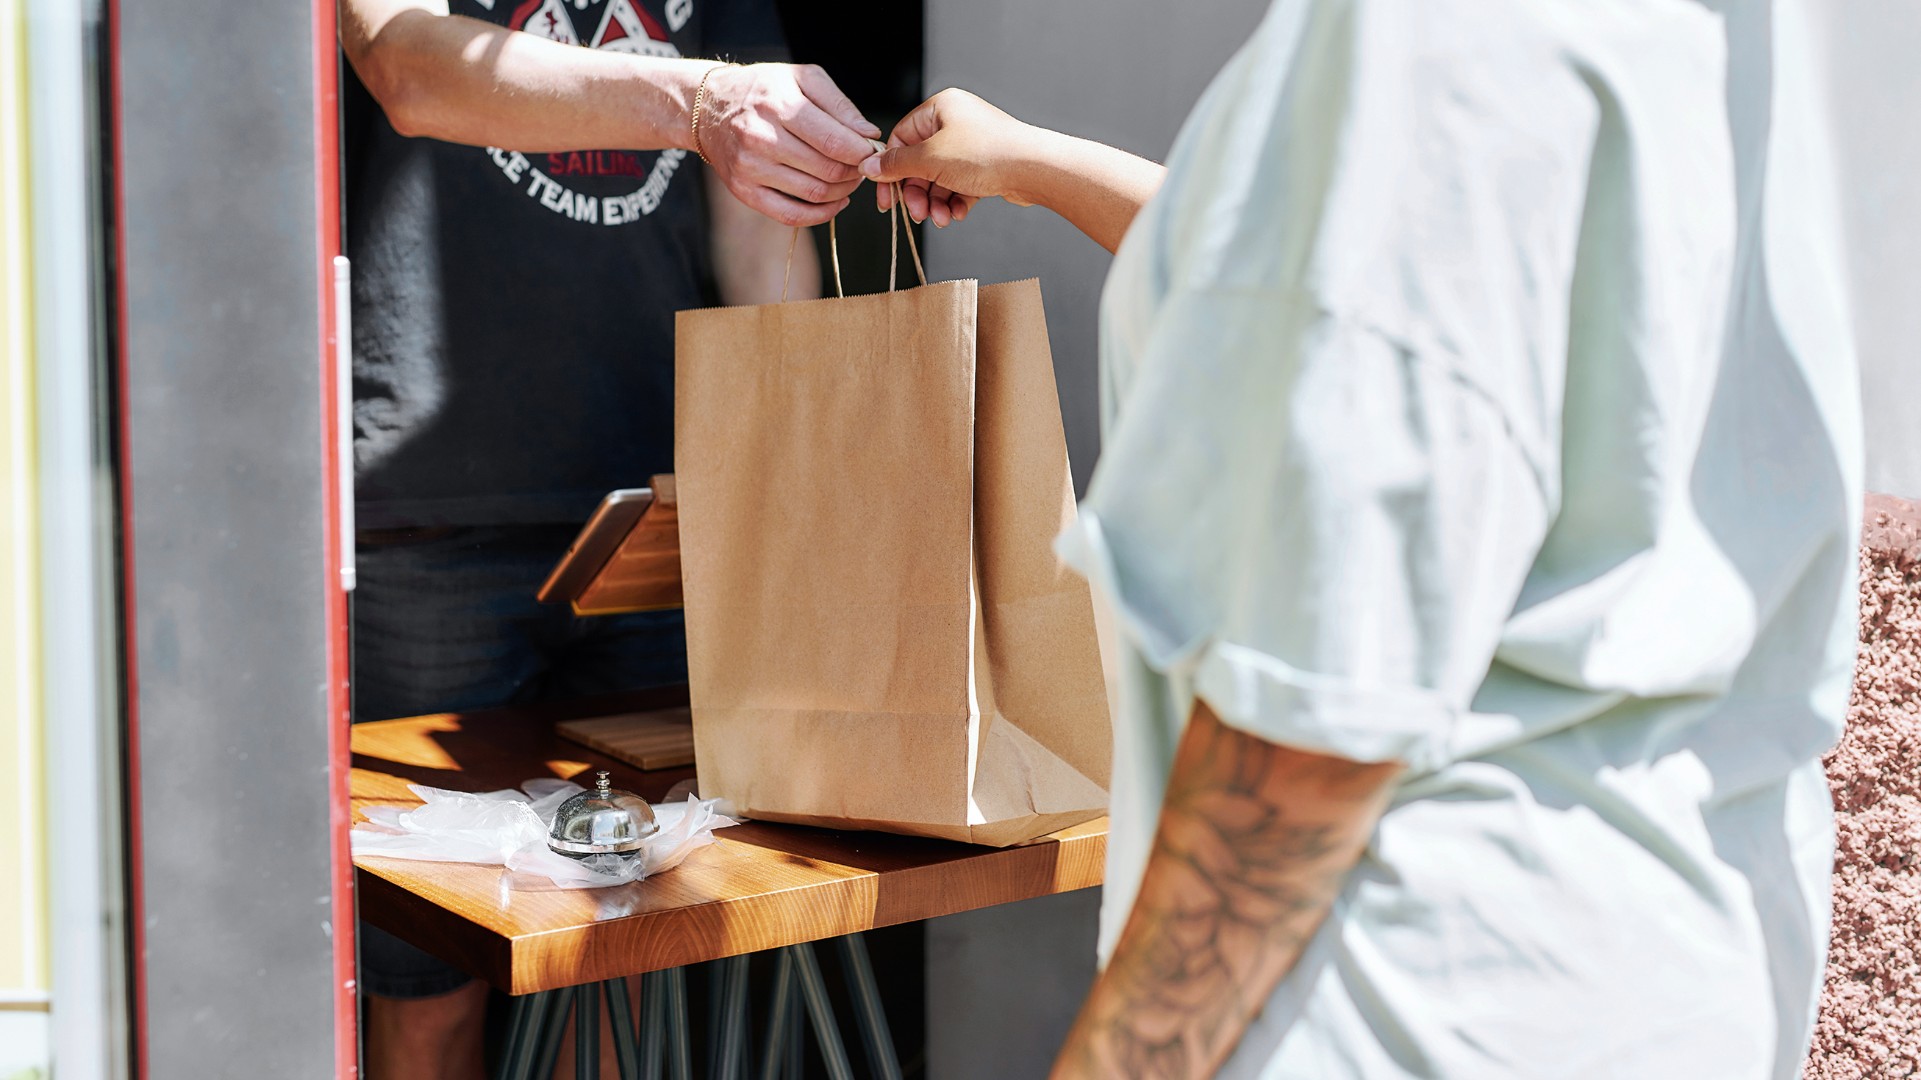 Loyalty: handing a customer thier bag